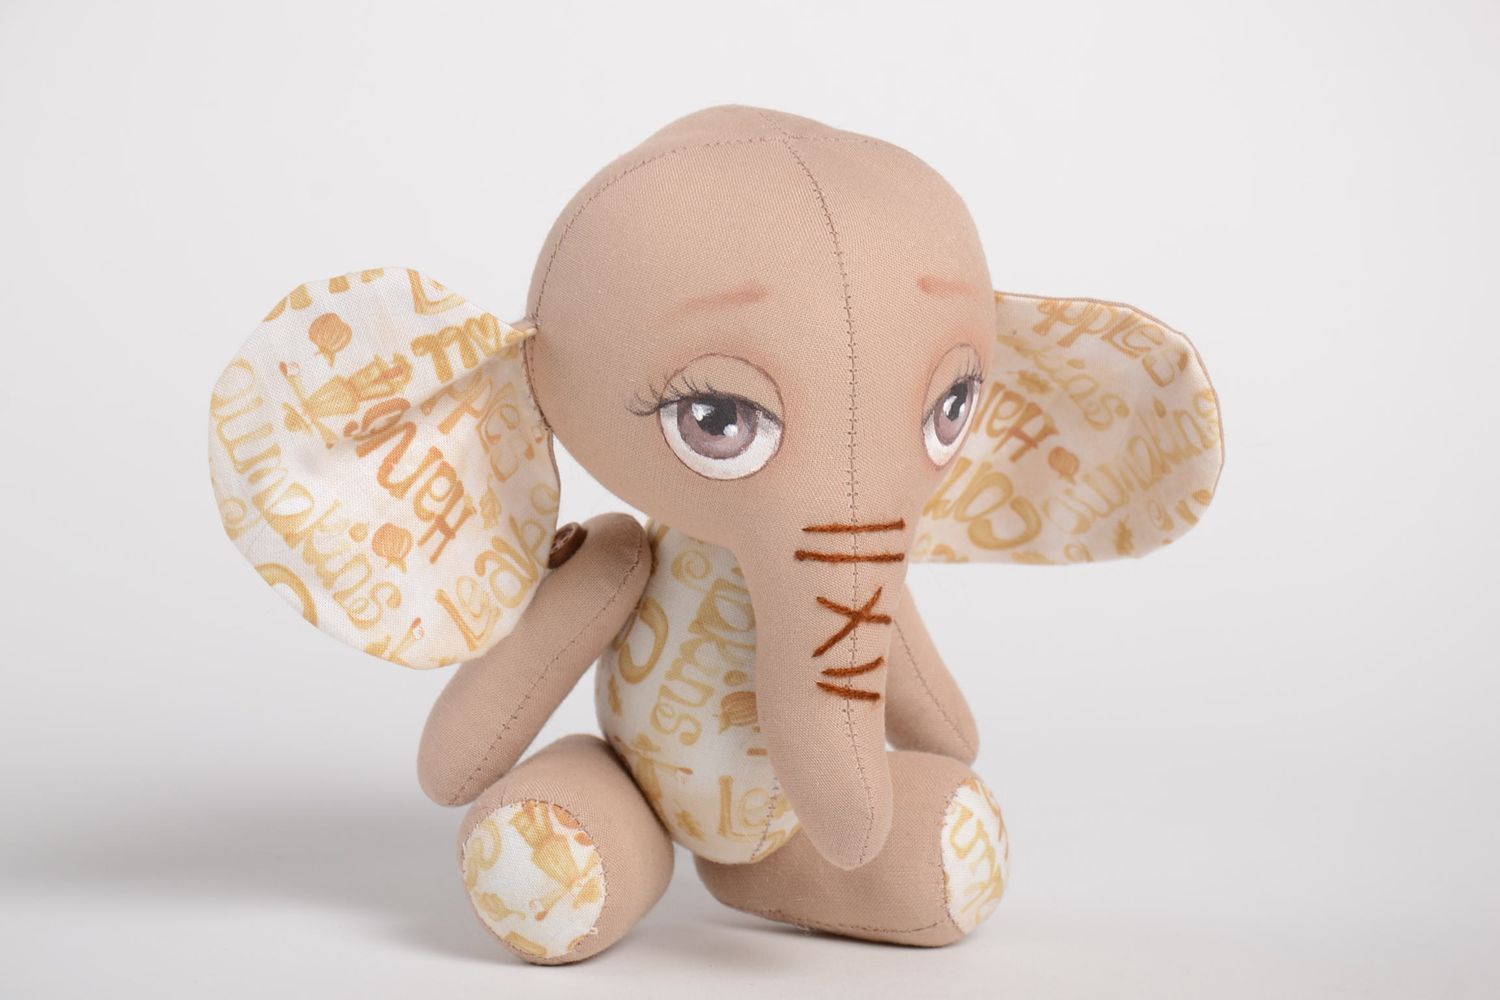 Handmade soft toy elephant stuffed doll for children interior decor ideas photo 2